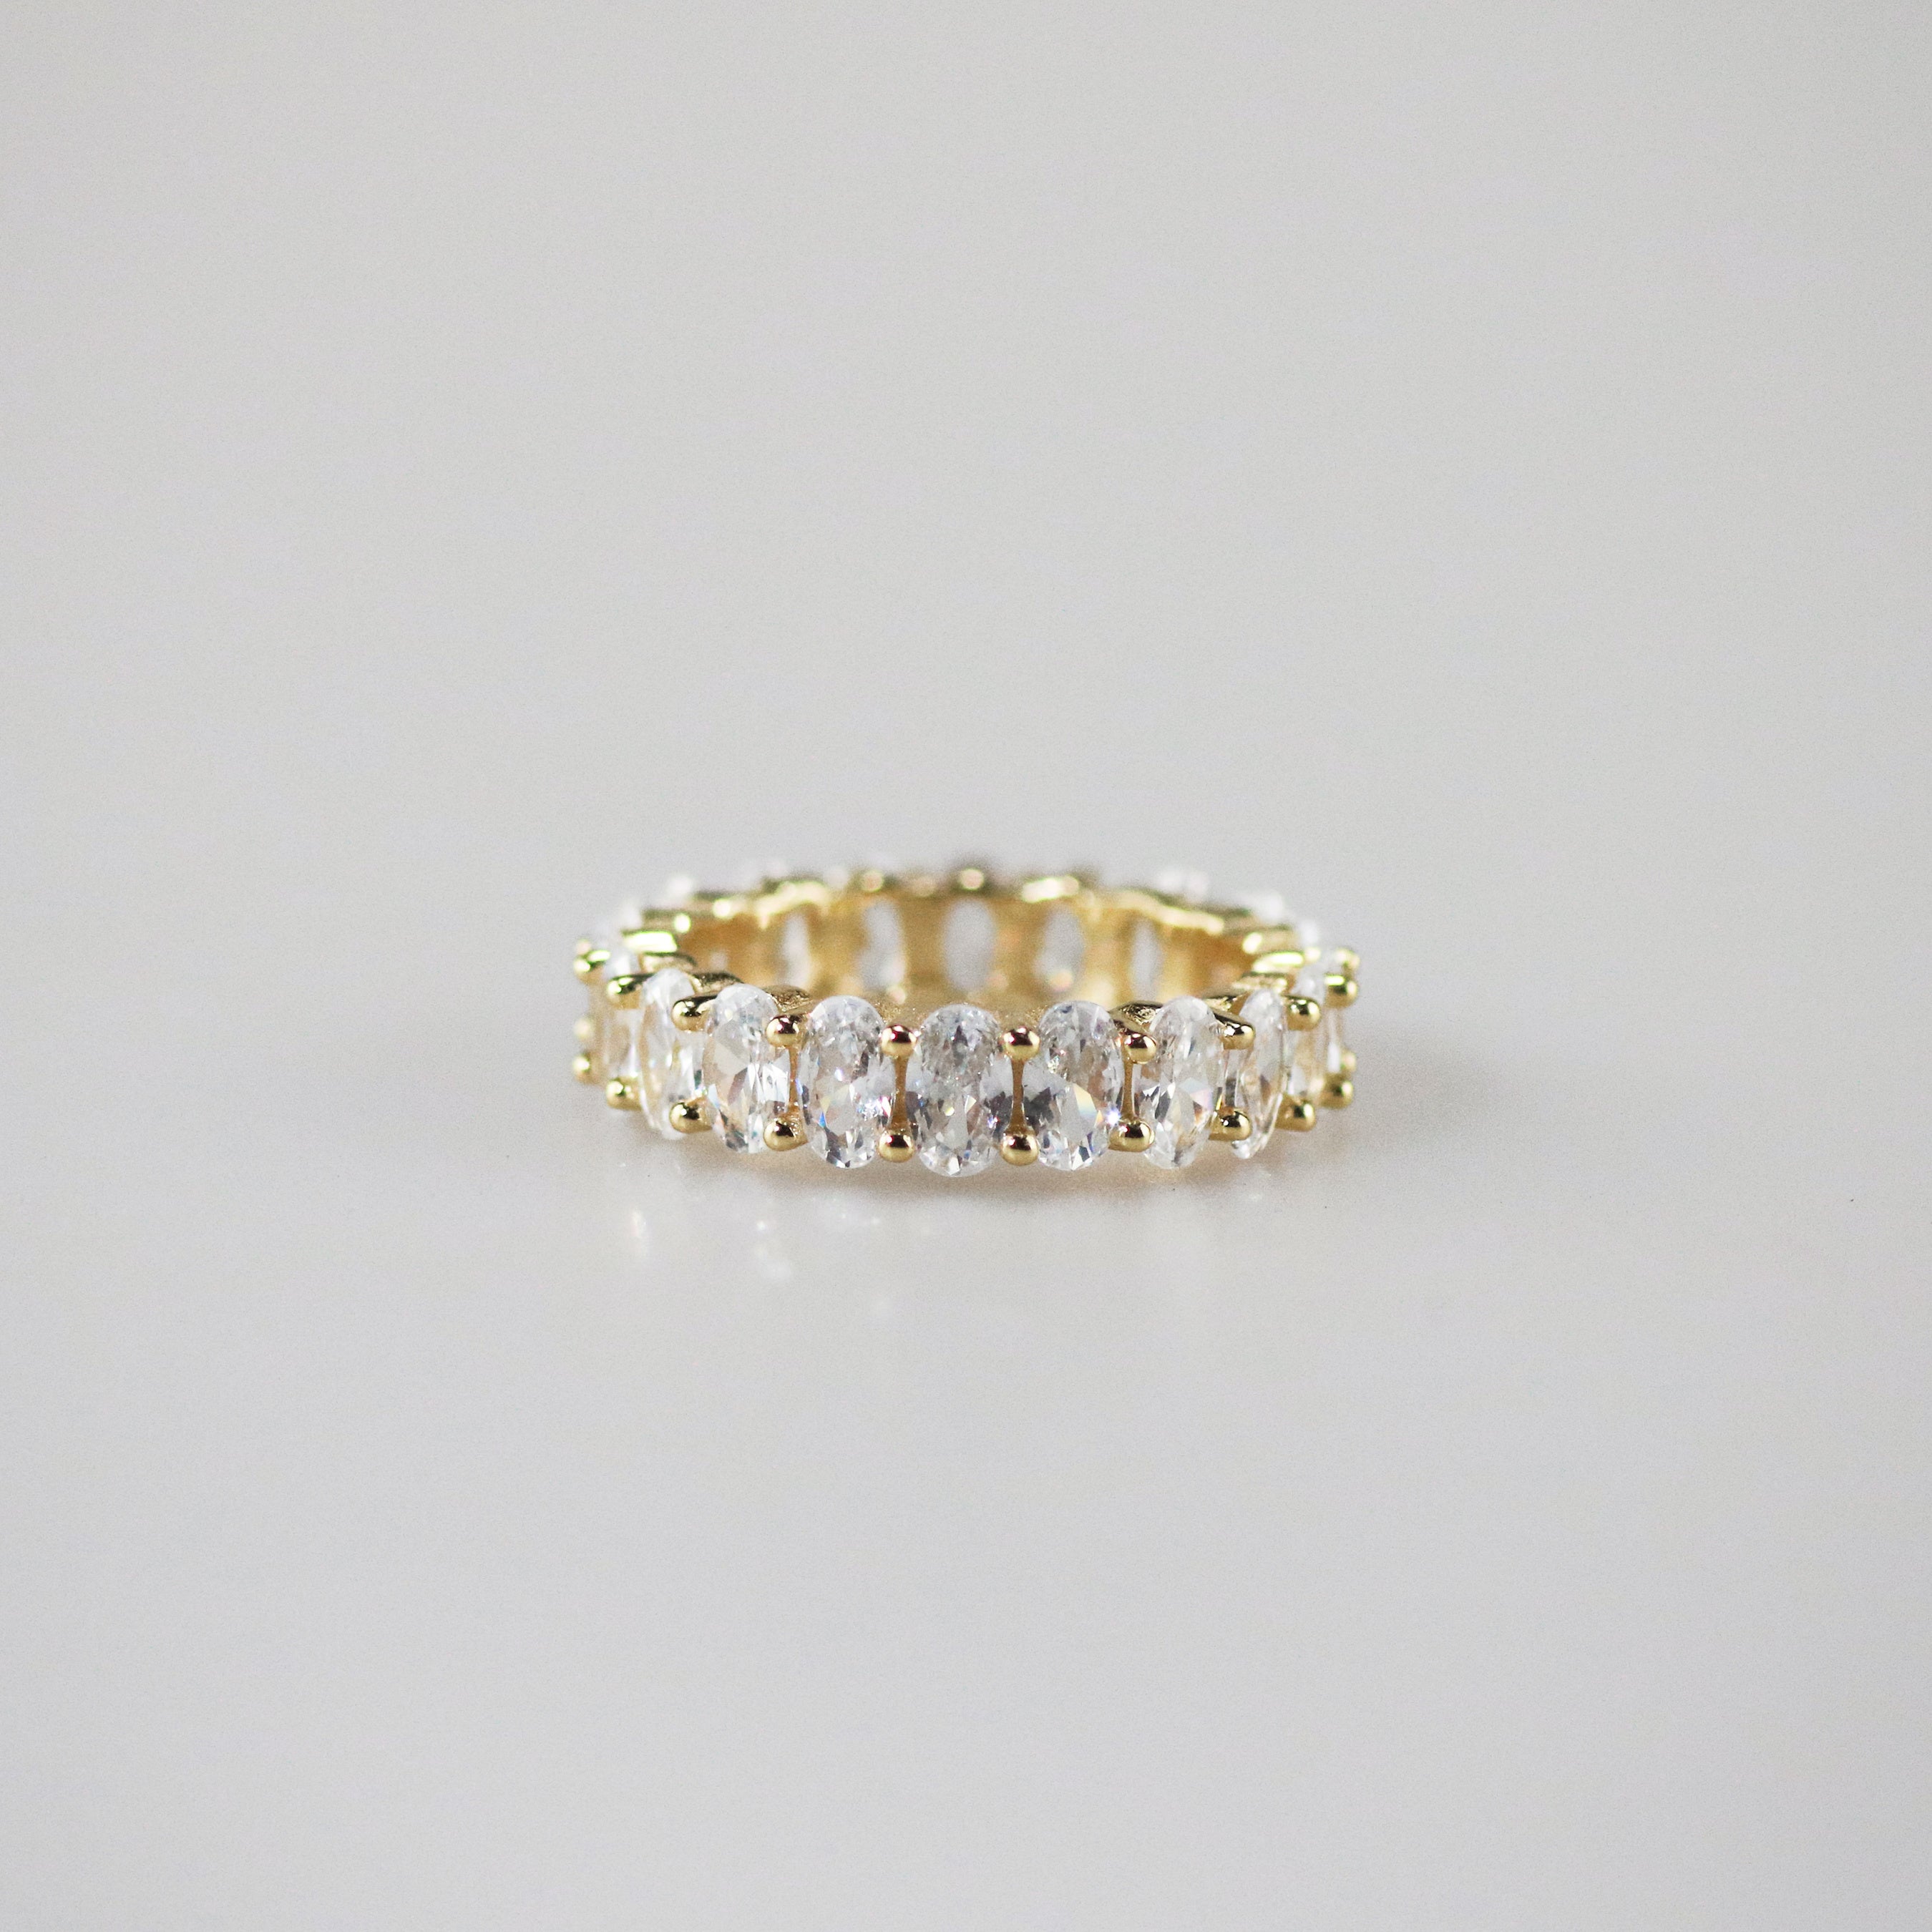 Meideya Jewelry Oval Cut Eternity Band Ring